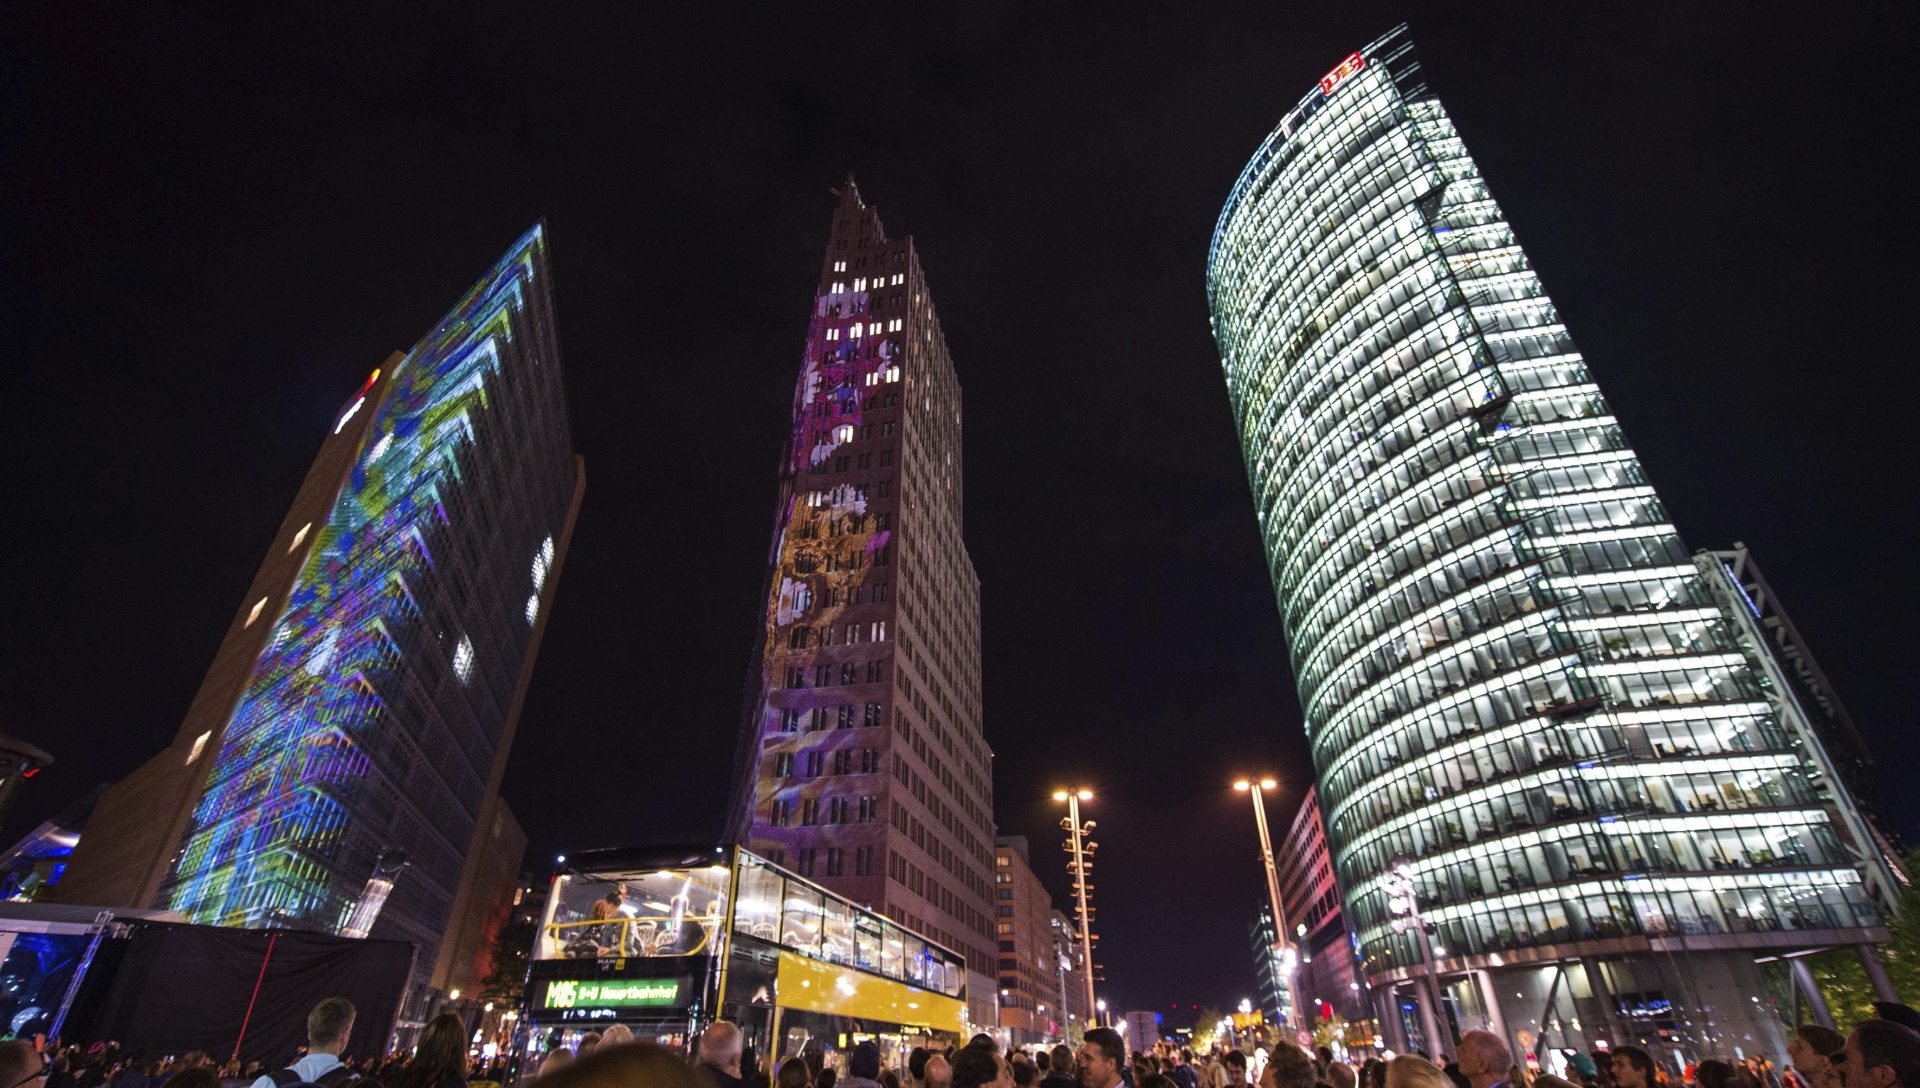 Edificios de la Potsdamer Platz se iluminan durante el 10 Festival anual de luces en Berlín, Alemania. EFE/EPA / LUKAS SCHULZE